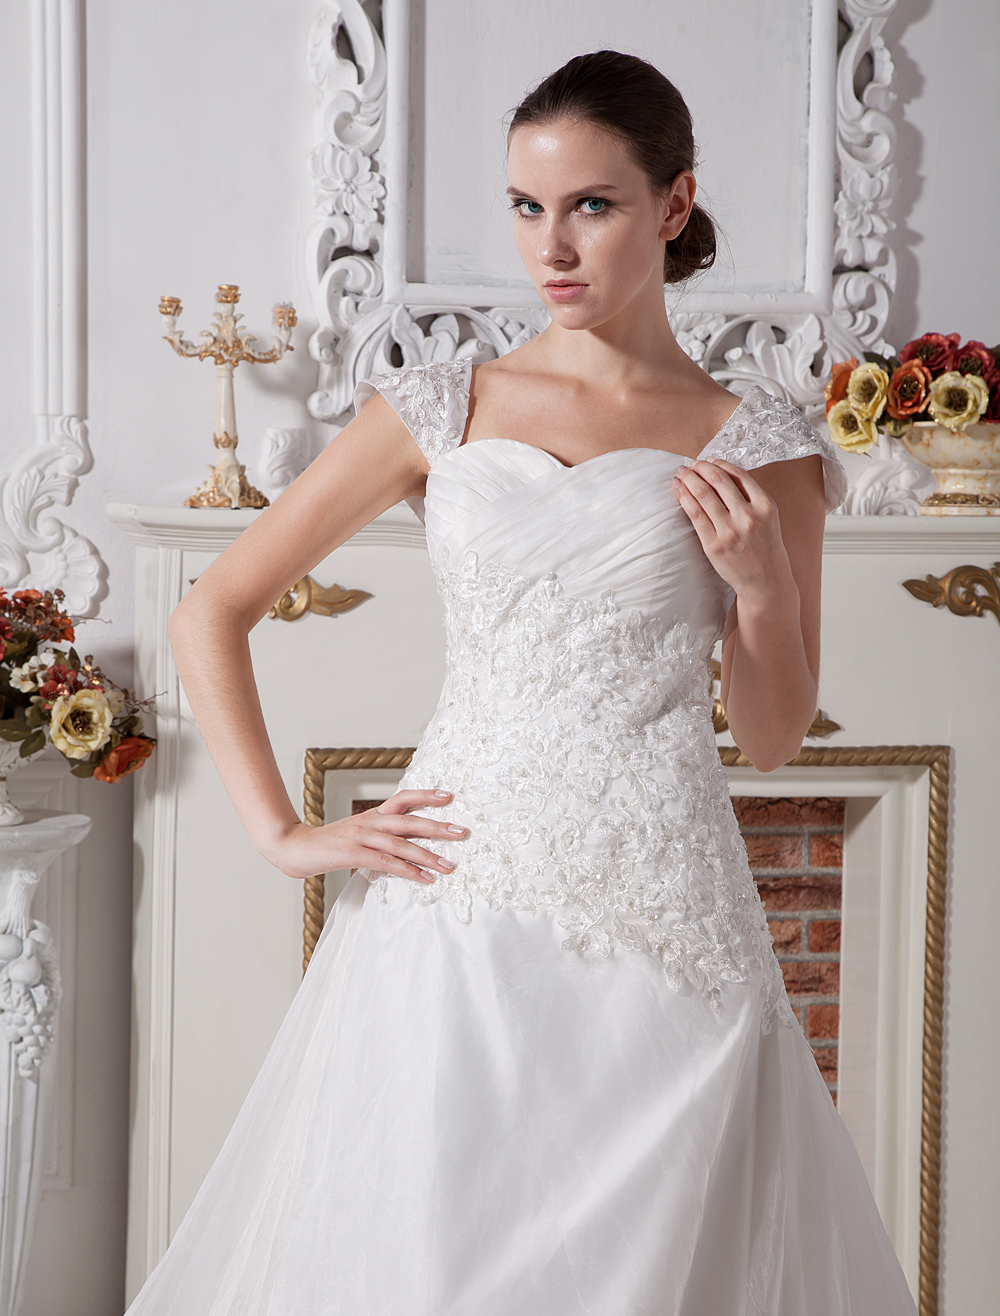 White A-line Sweetheart Cap Sleeves Lace Satin Wedding Dress - Milanoo.com